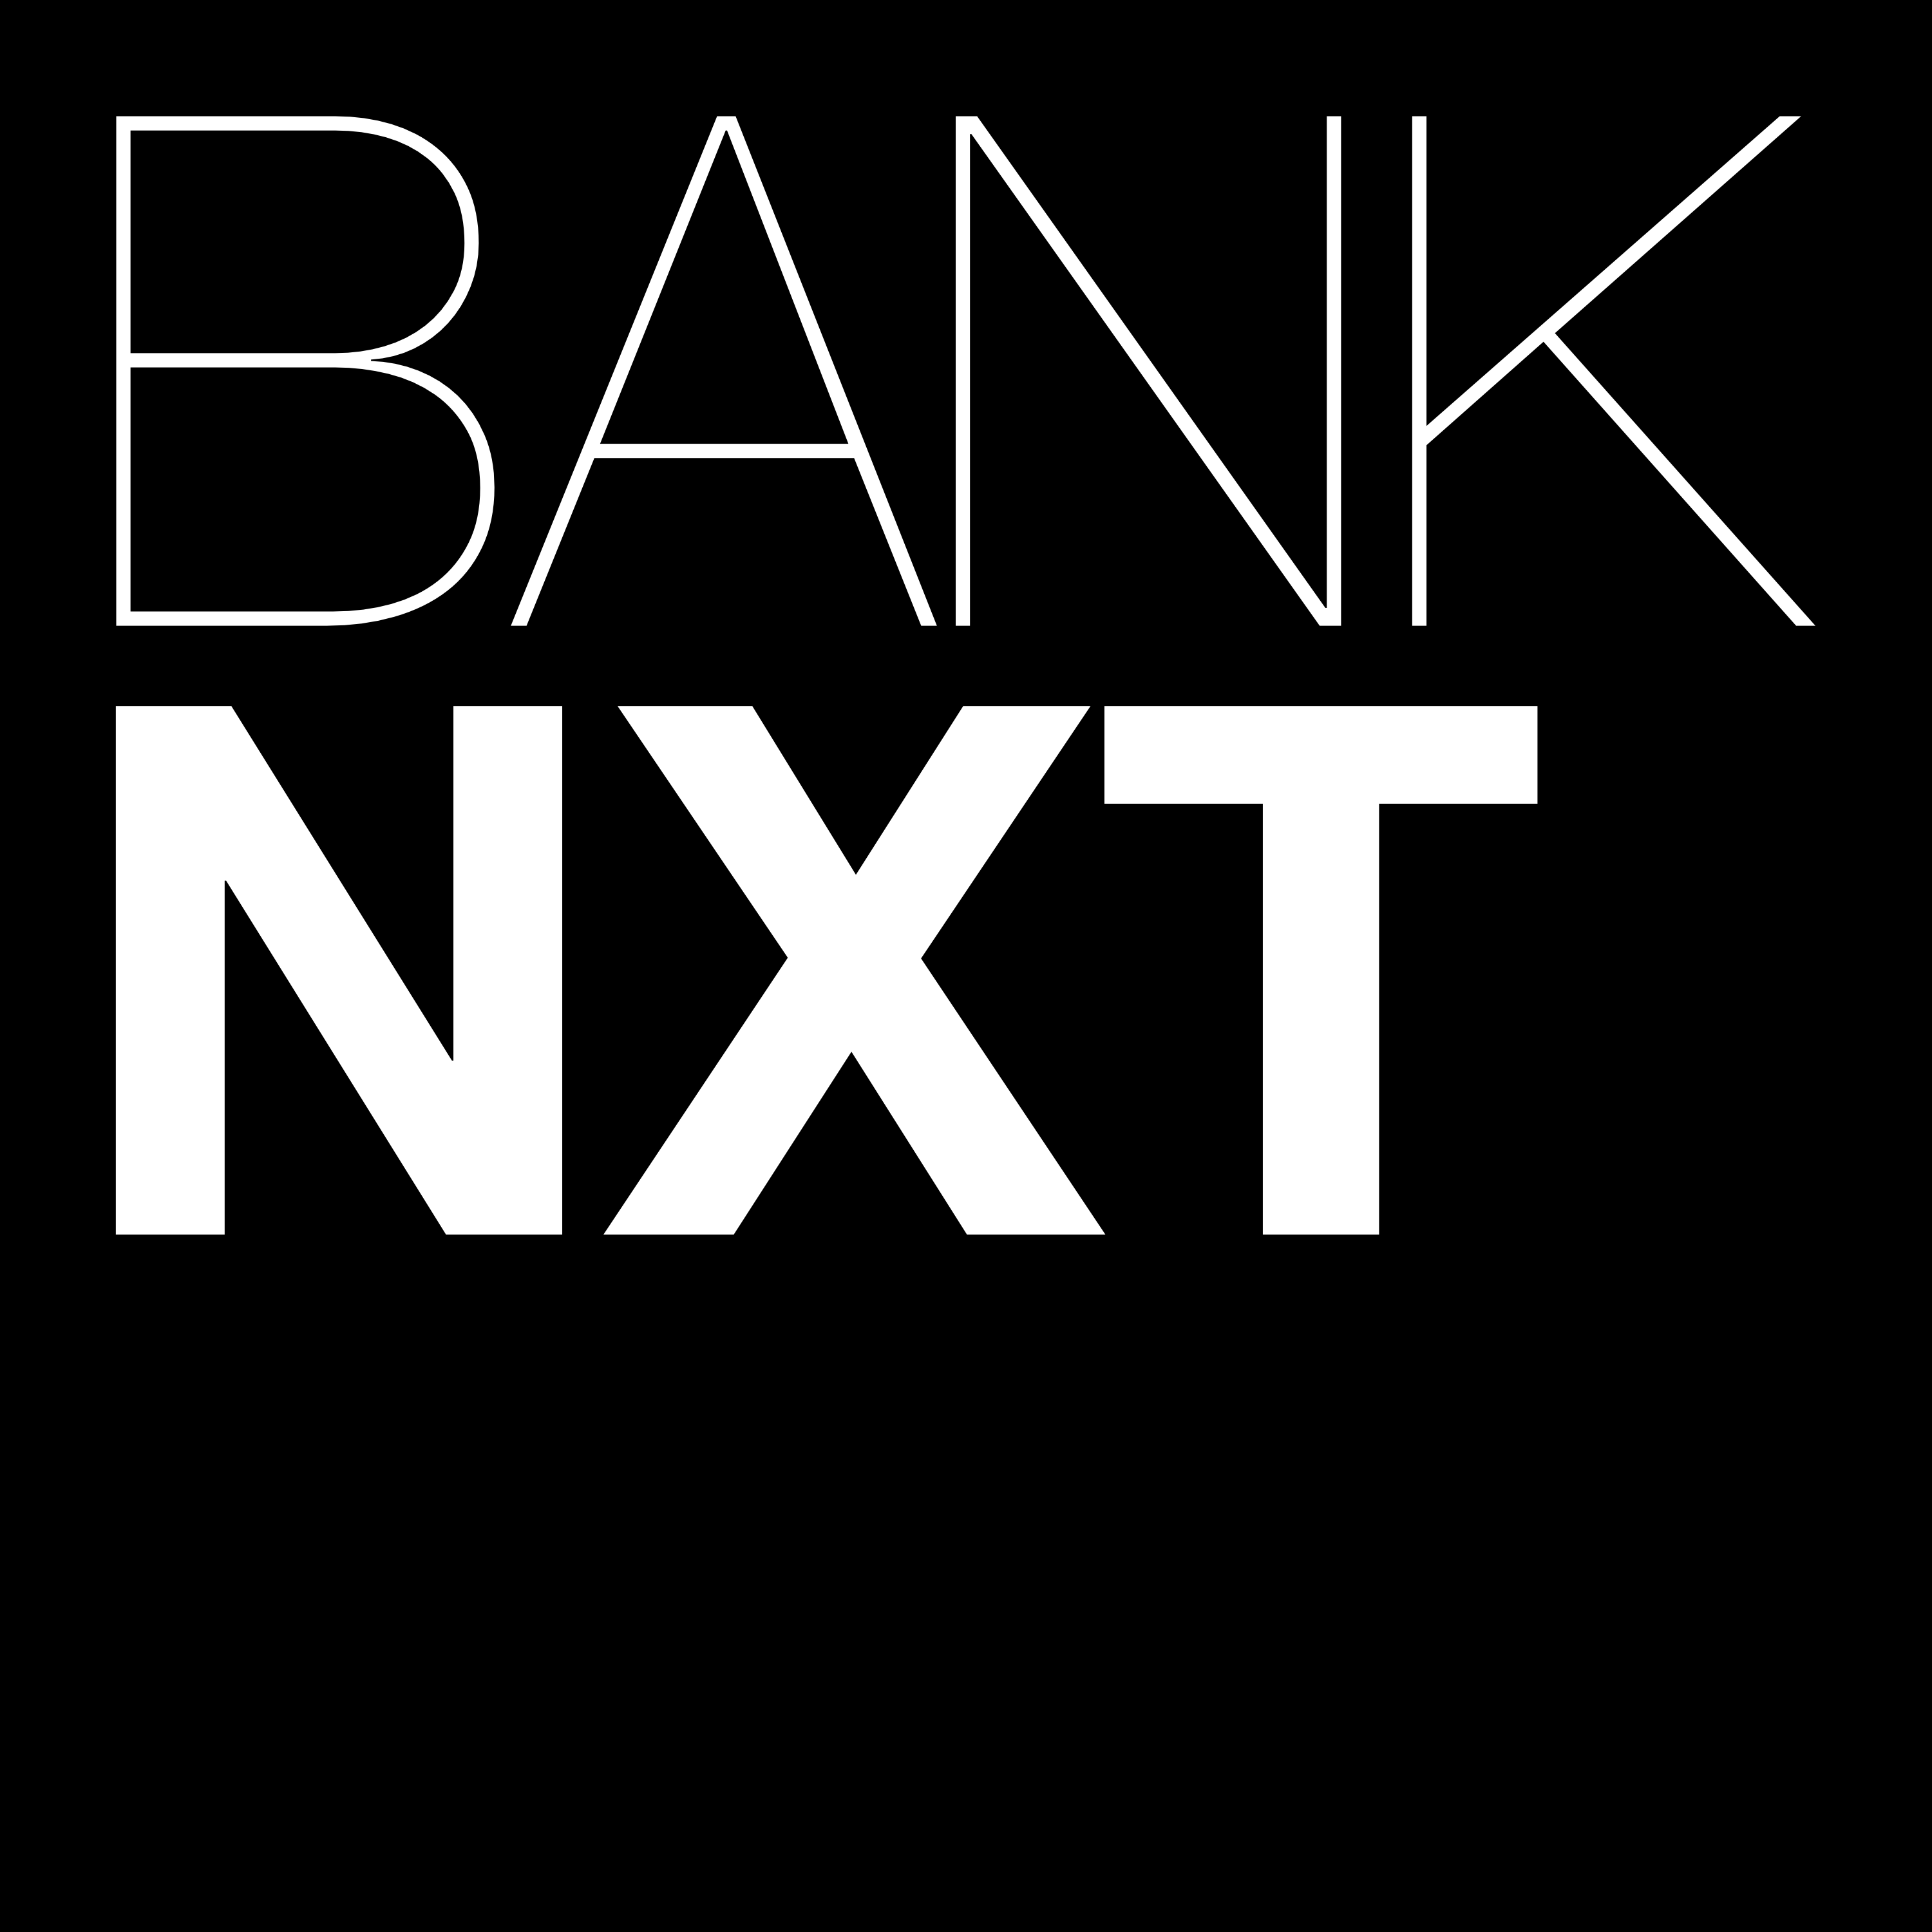 Black Square Logo - BankNXT square PNG logo on black